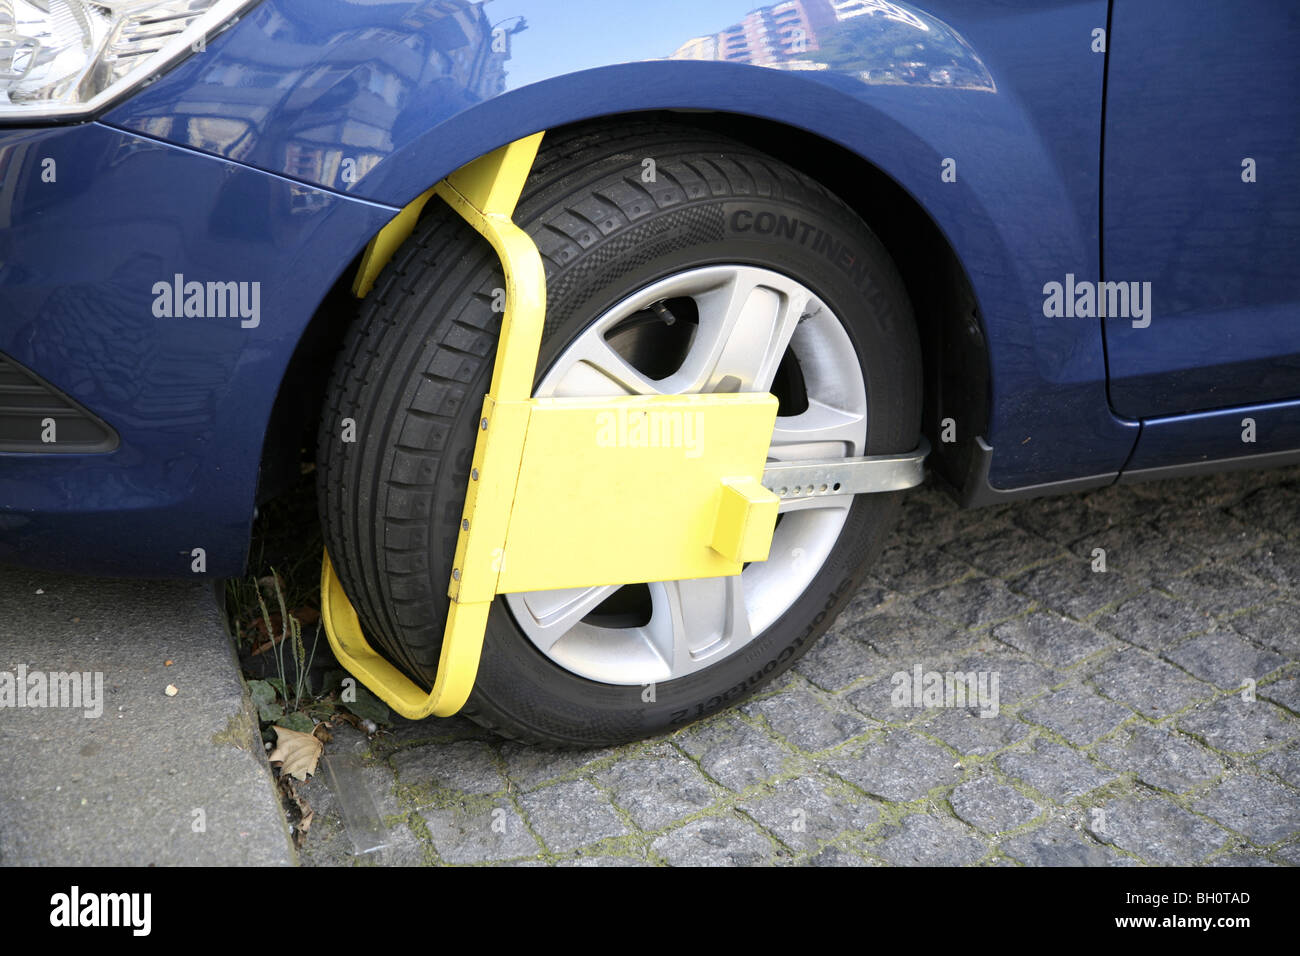 https://c8.alamy.com/comp/BH0TAD/berlin-parkkralle-wheel-clamp-BH0TAD.jpg